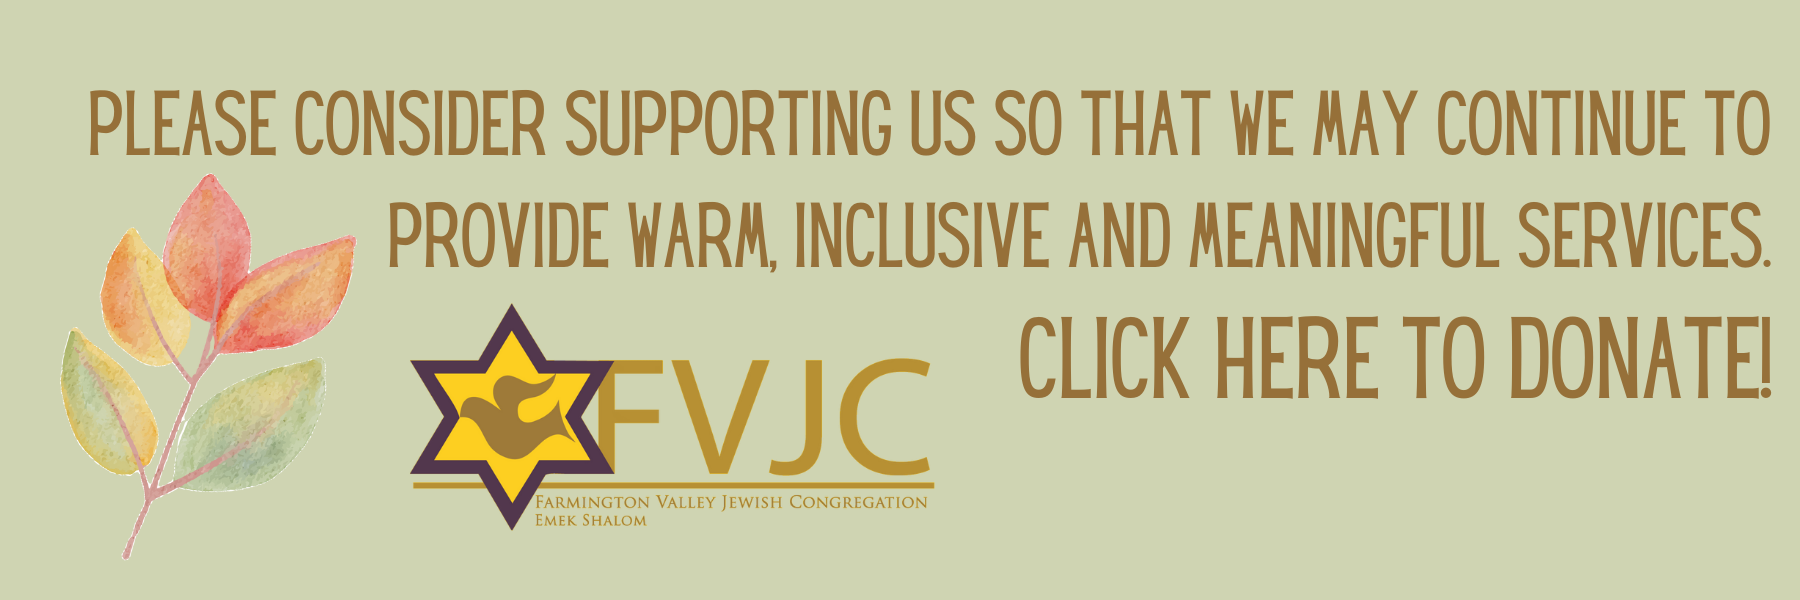 CLICK HERE TO SUPPORT FVJC-EMEK SHALOM